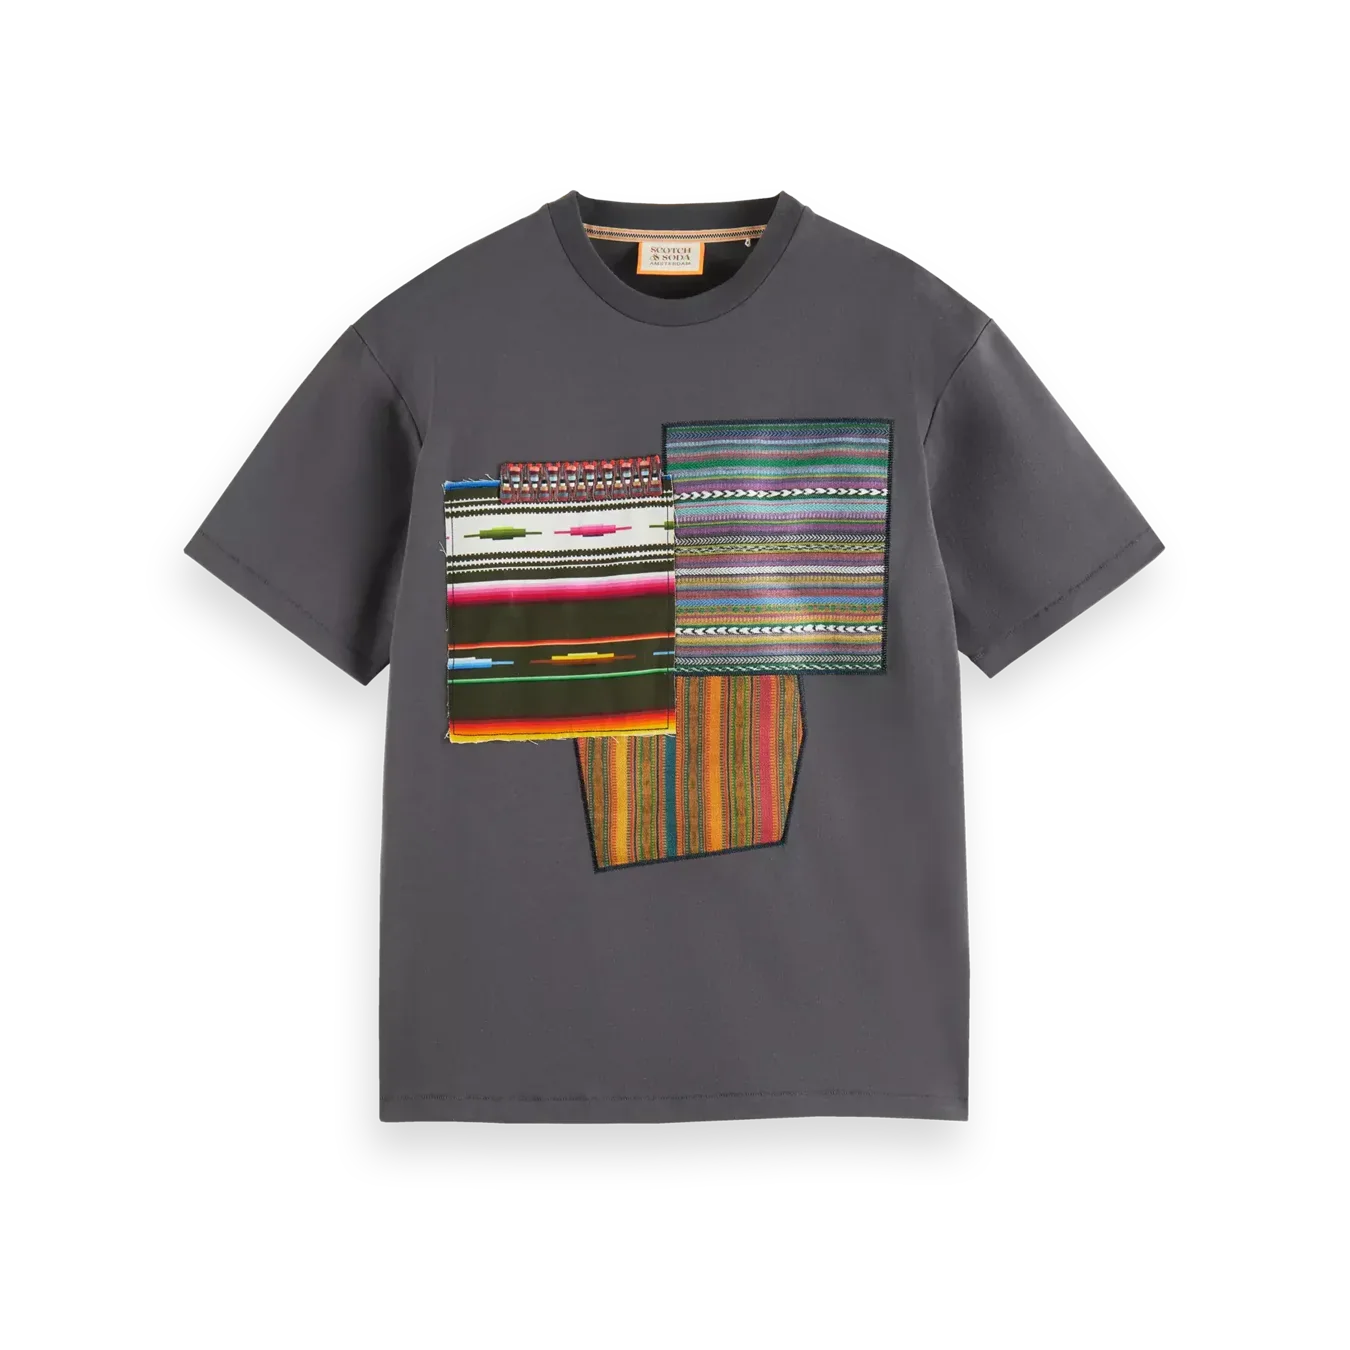 'Scotch & Soda 3 Patch Woven Applique T-Shirt' in 'Moondust' colour